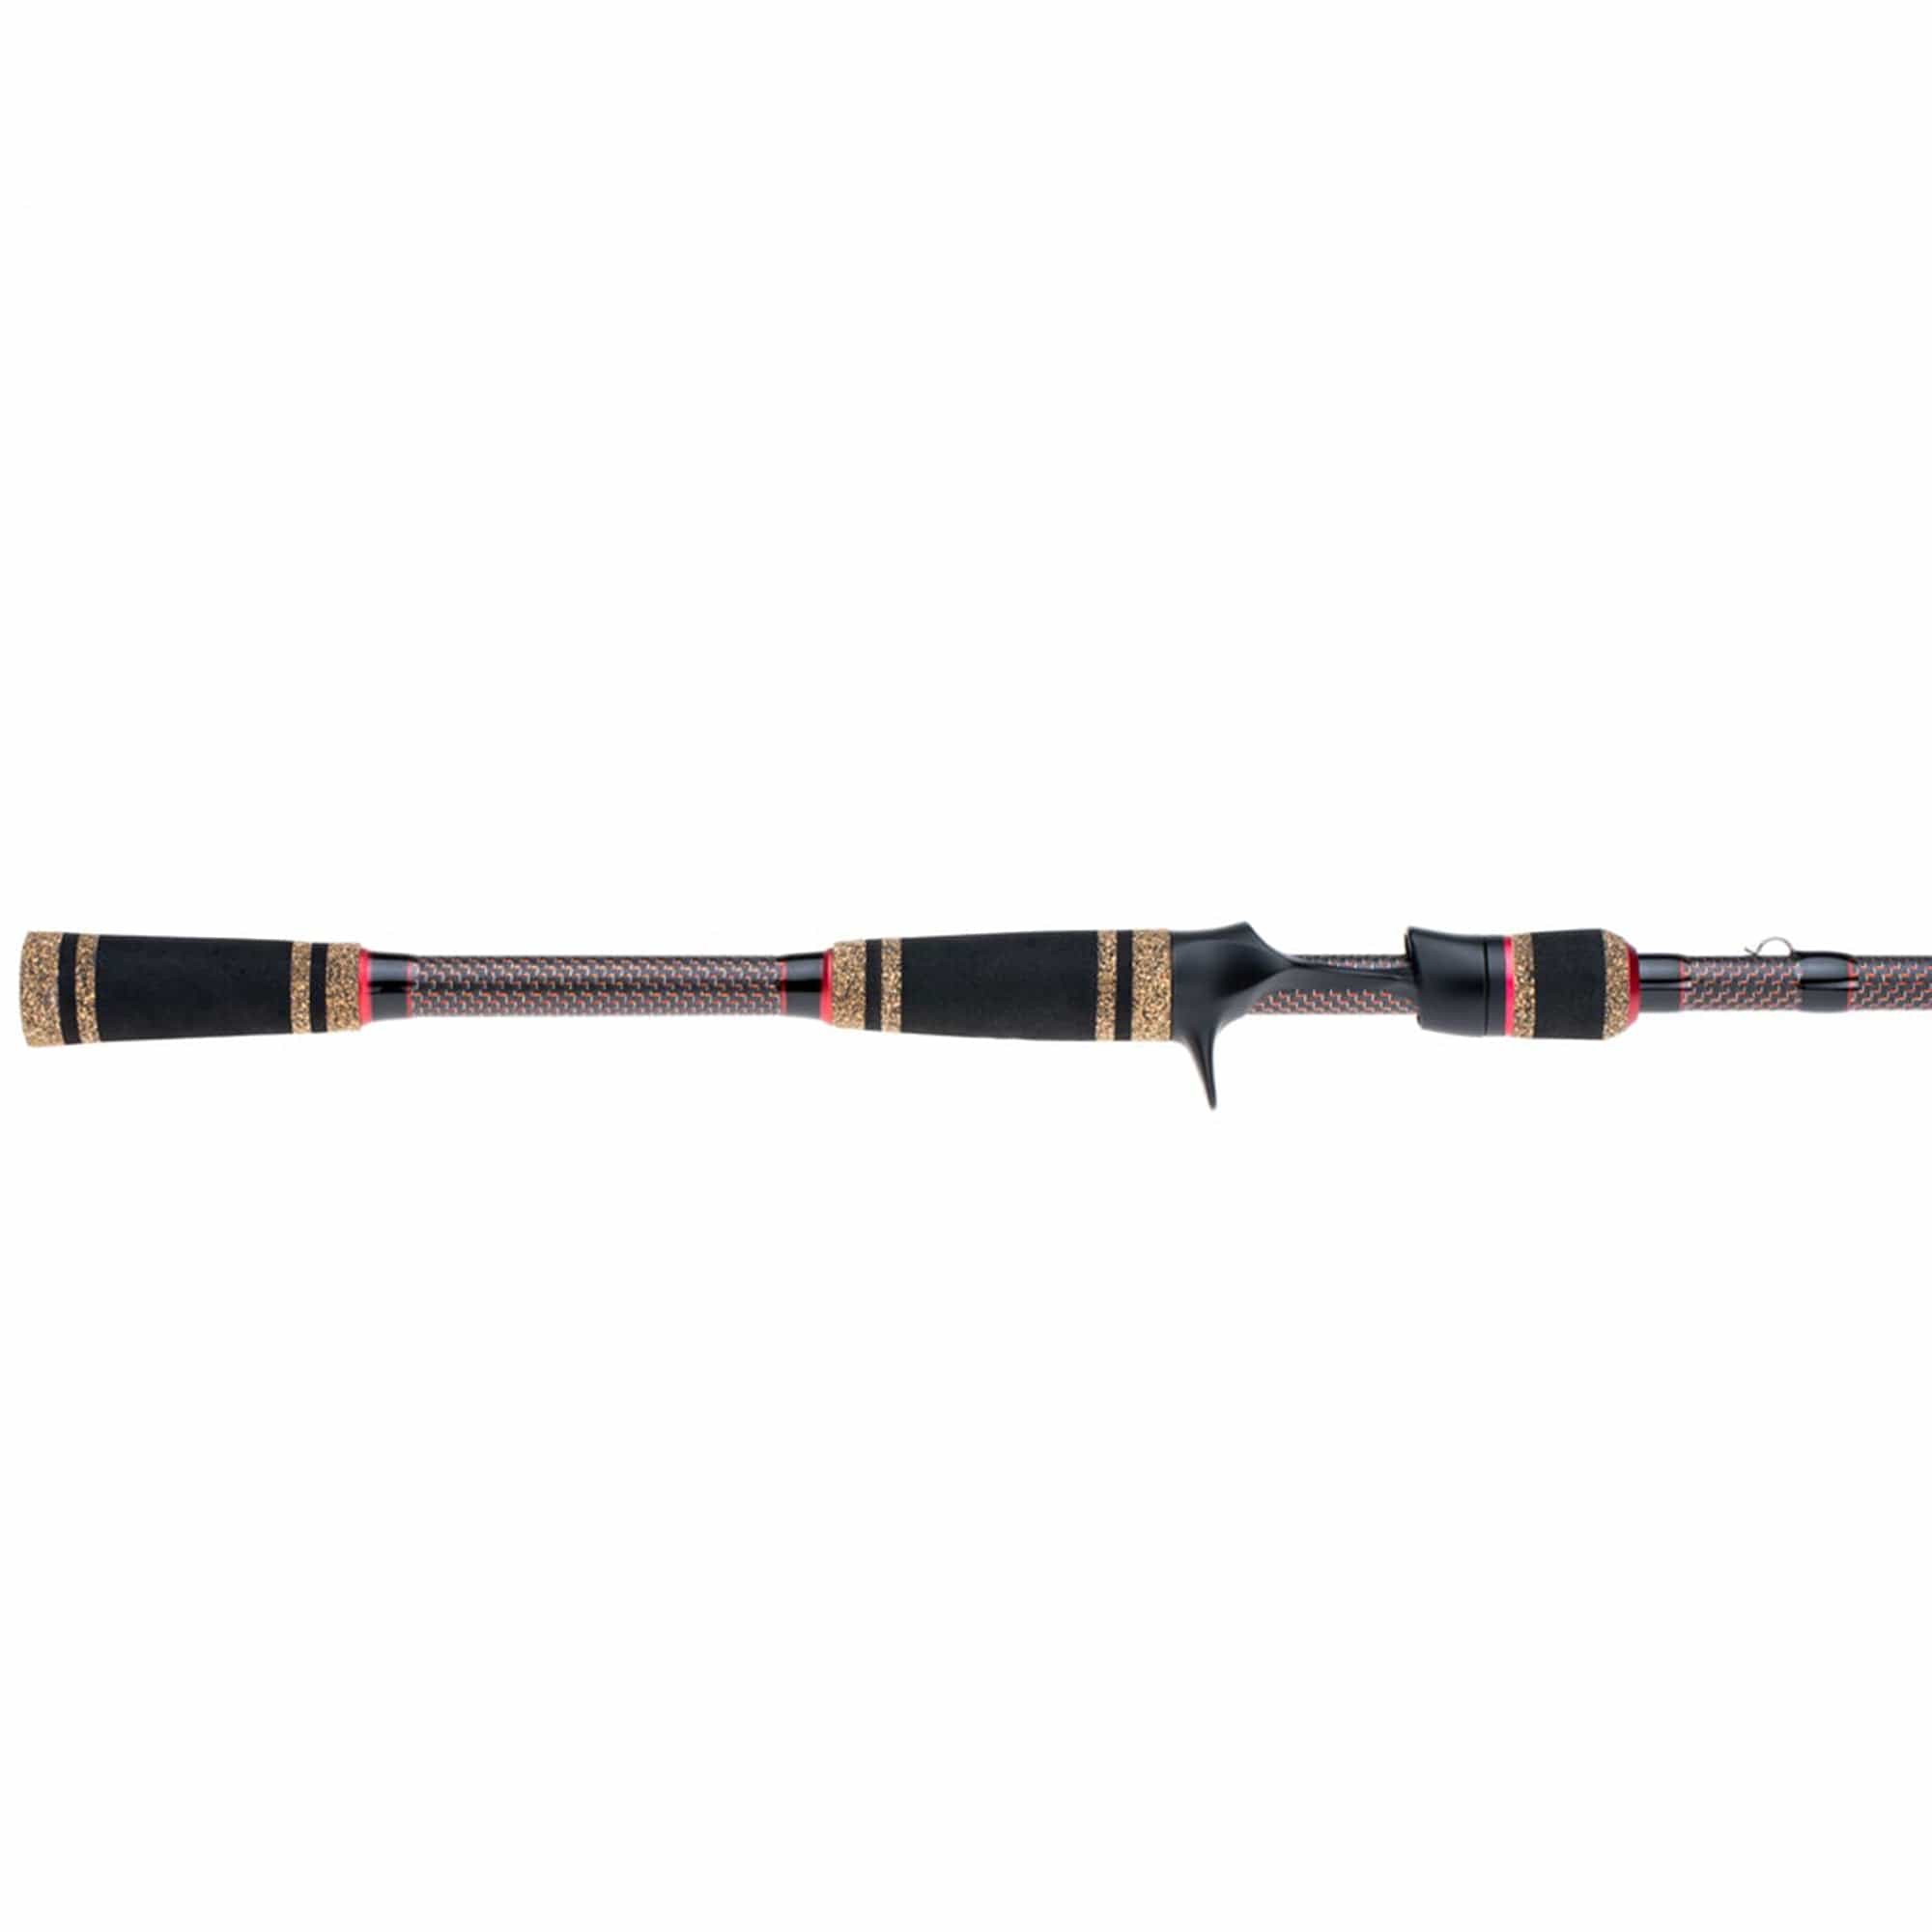 American Baitworks HFHFX70MCC Halo HFX Pro 7' Medium Cranking Fishing Rod